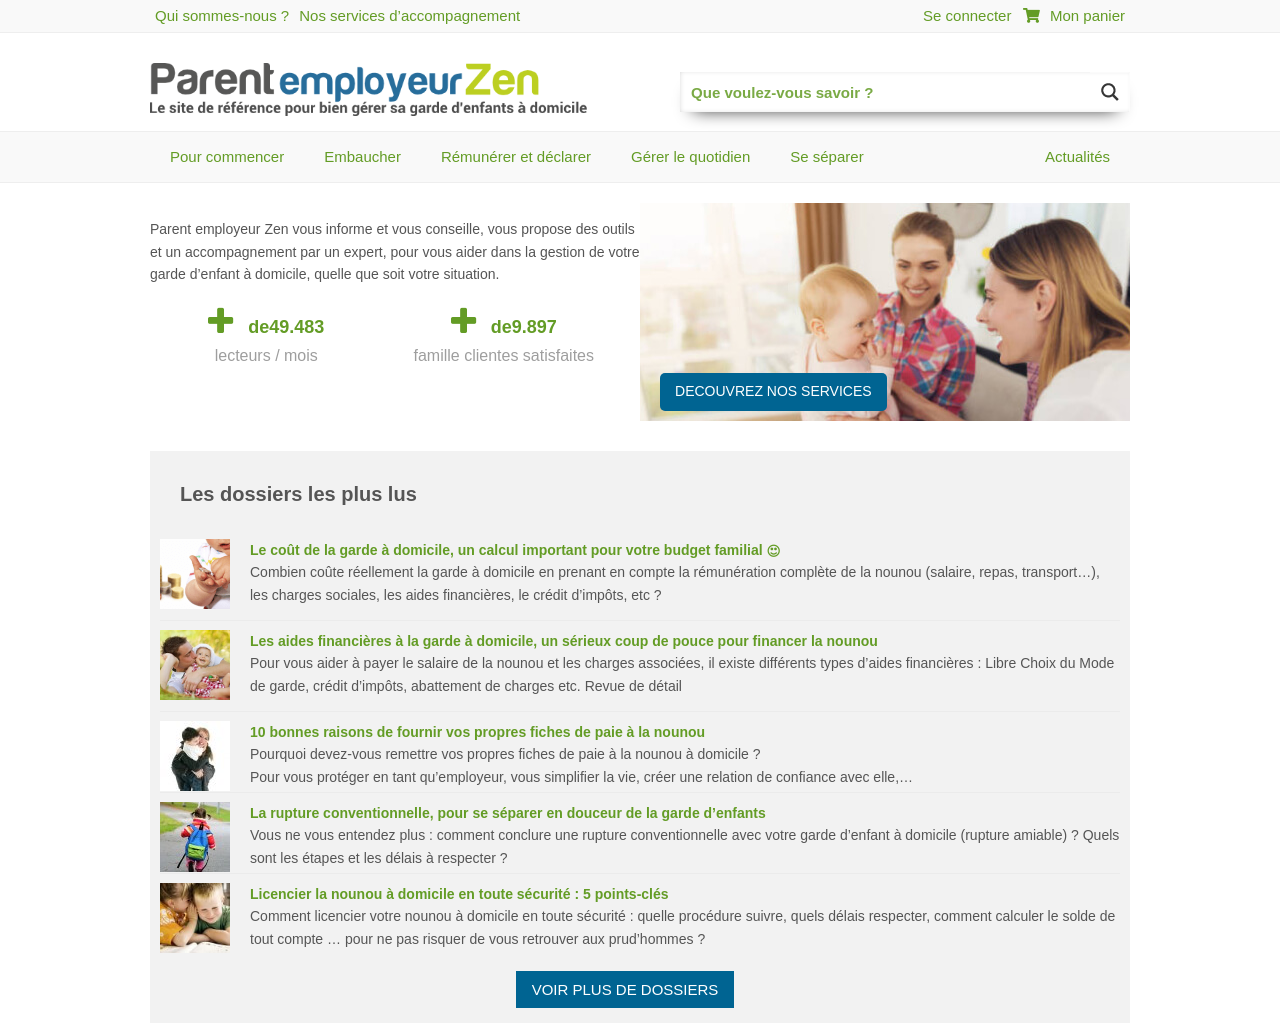 www.parent-employeur-zen.com